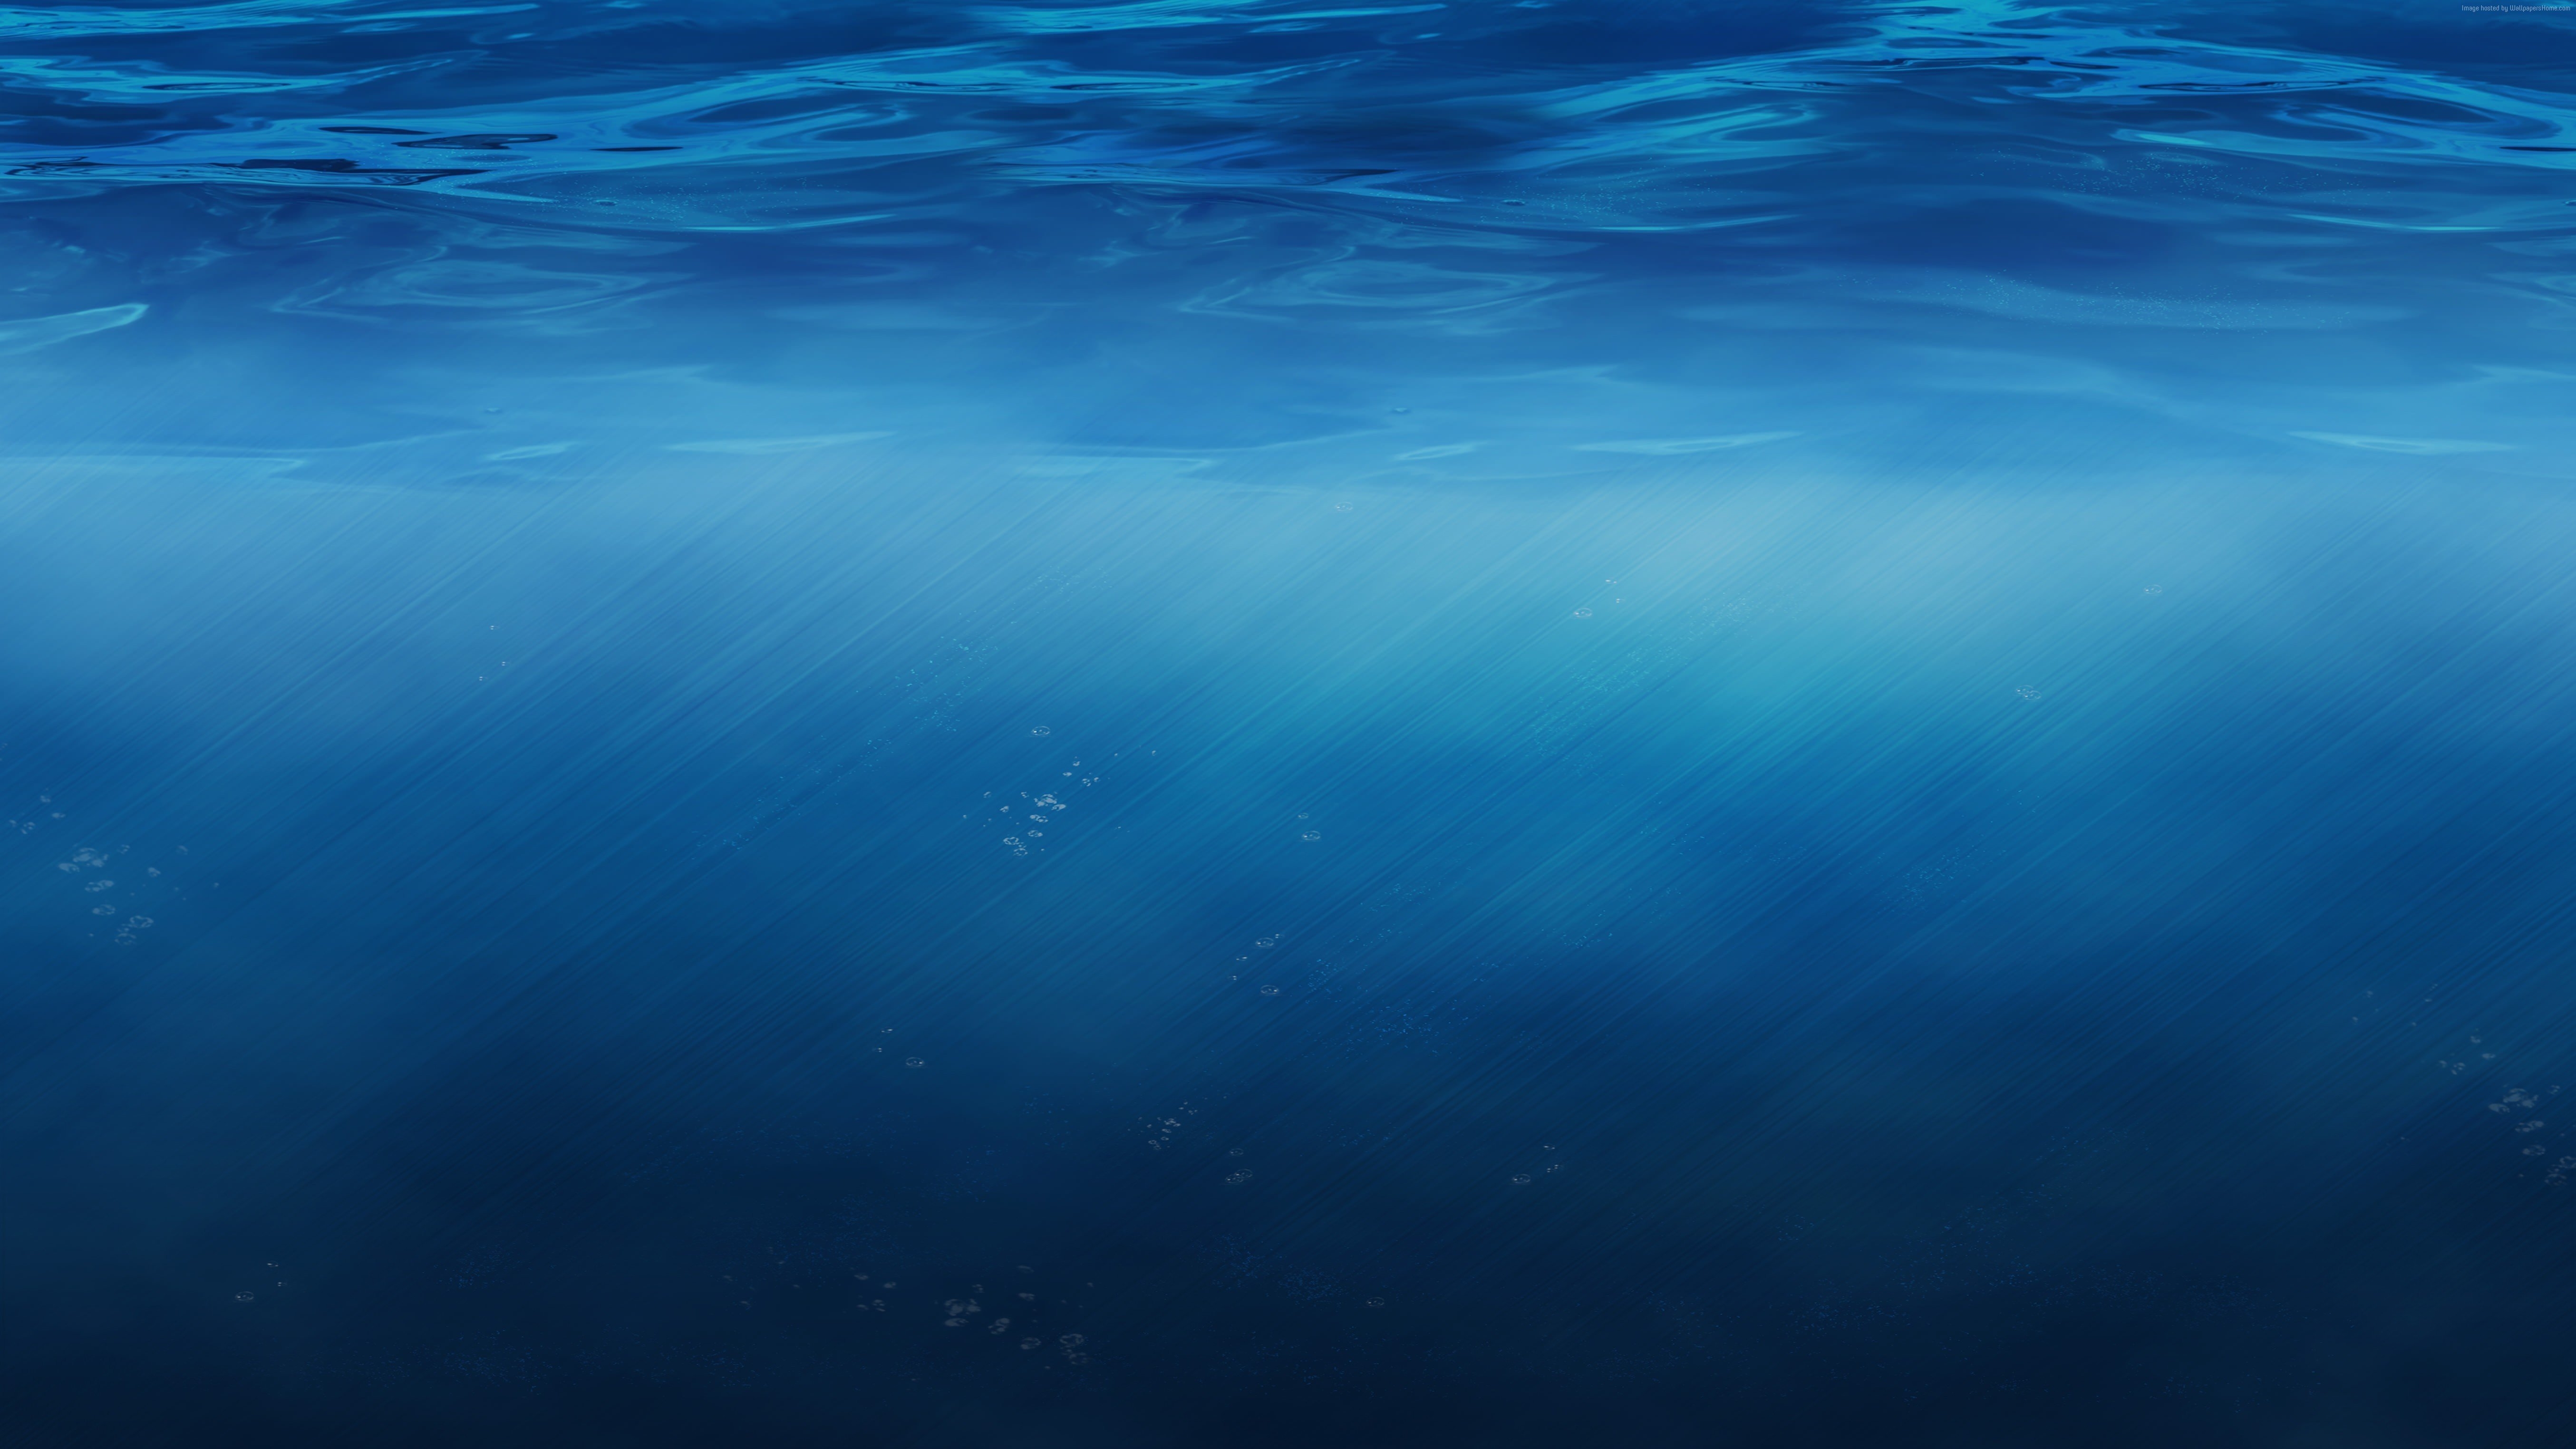 Толща воды океана. Под водой. Океан под водой. Толщи воды. Море глубина.